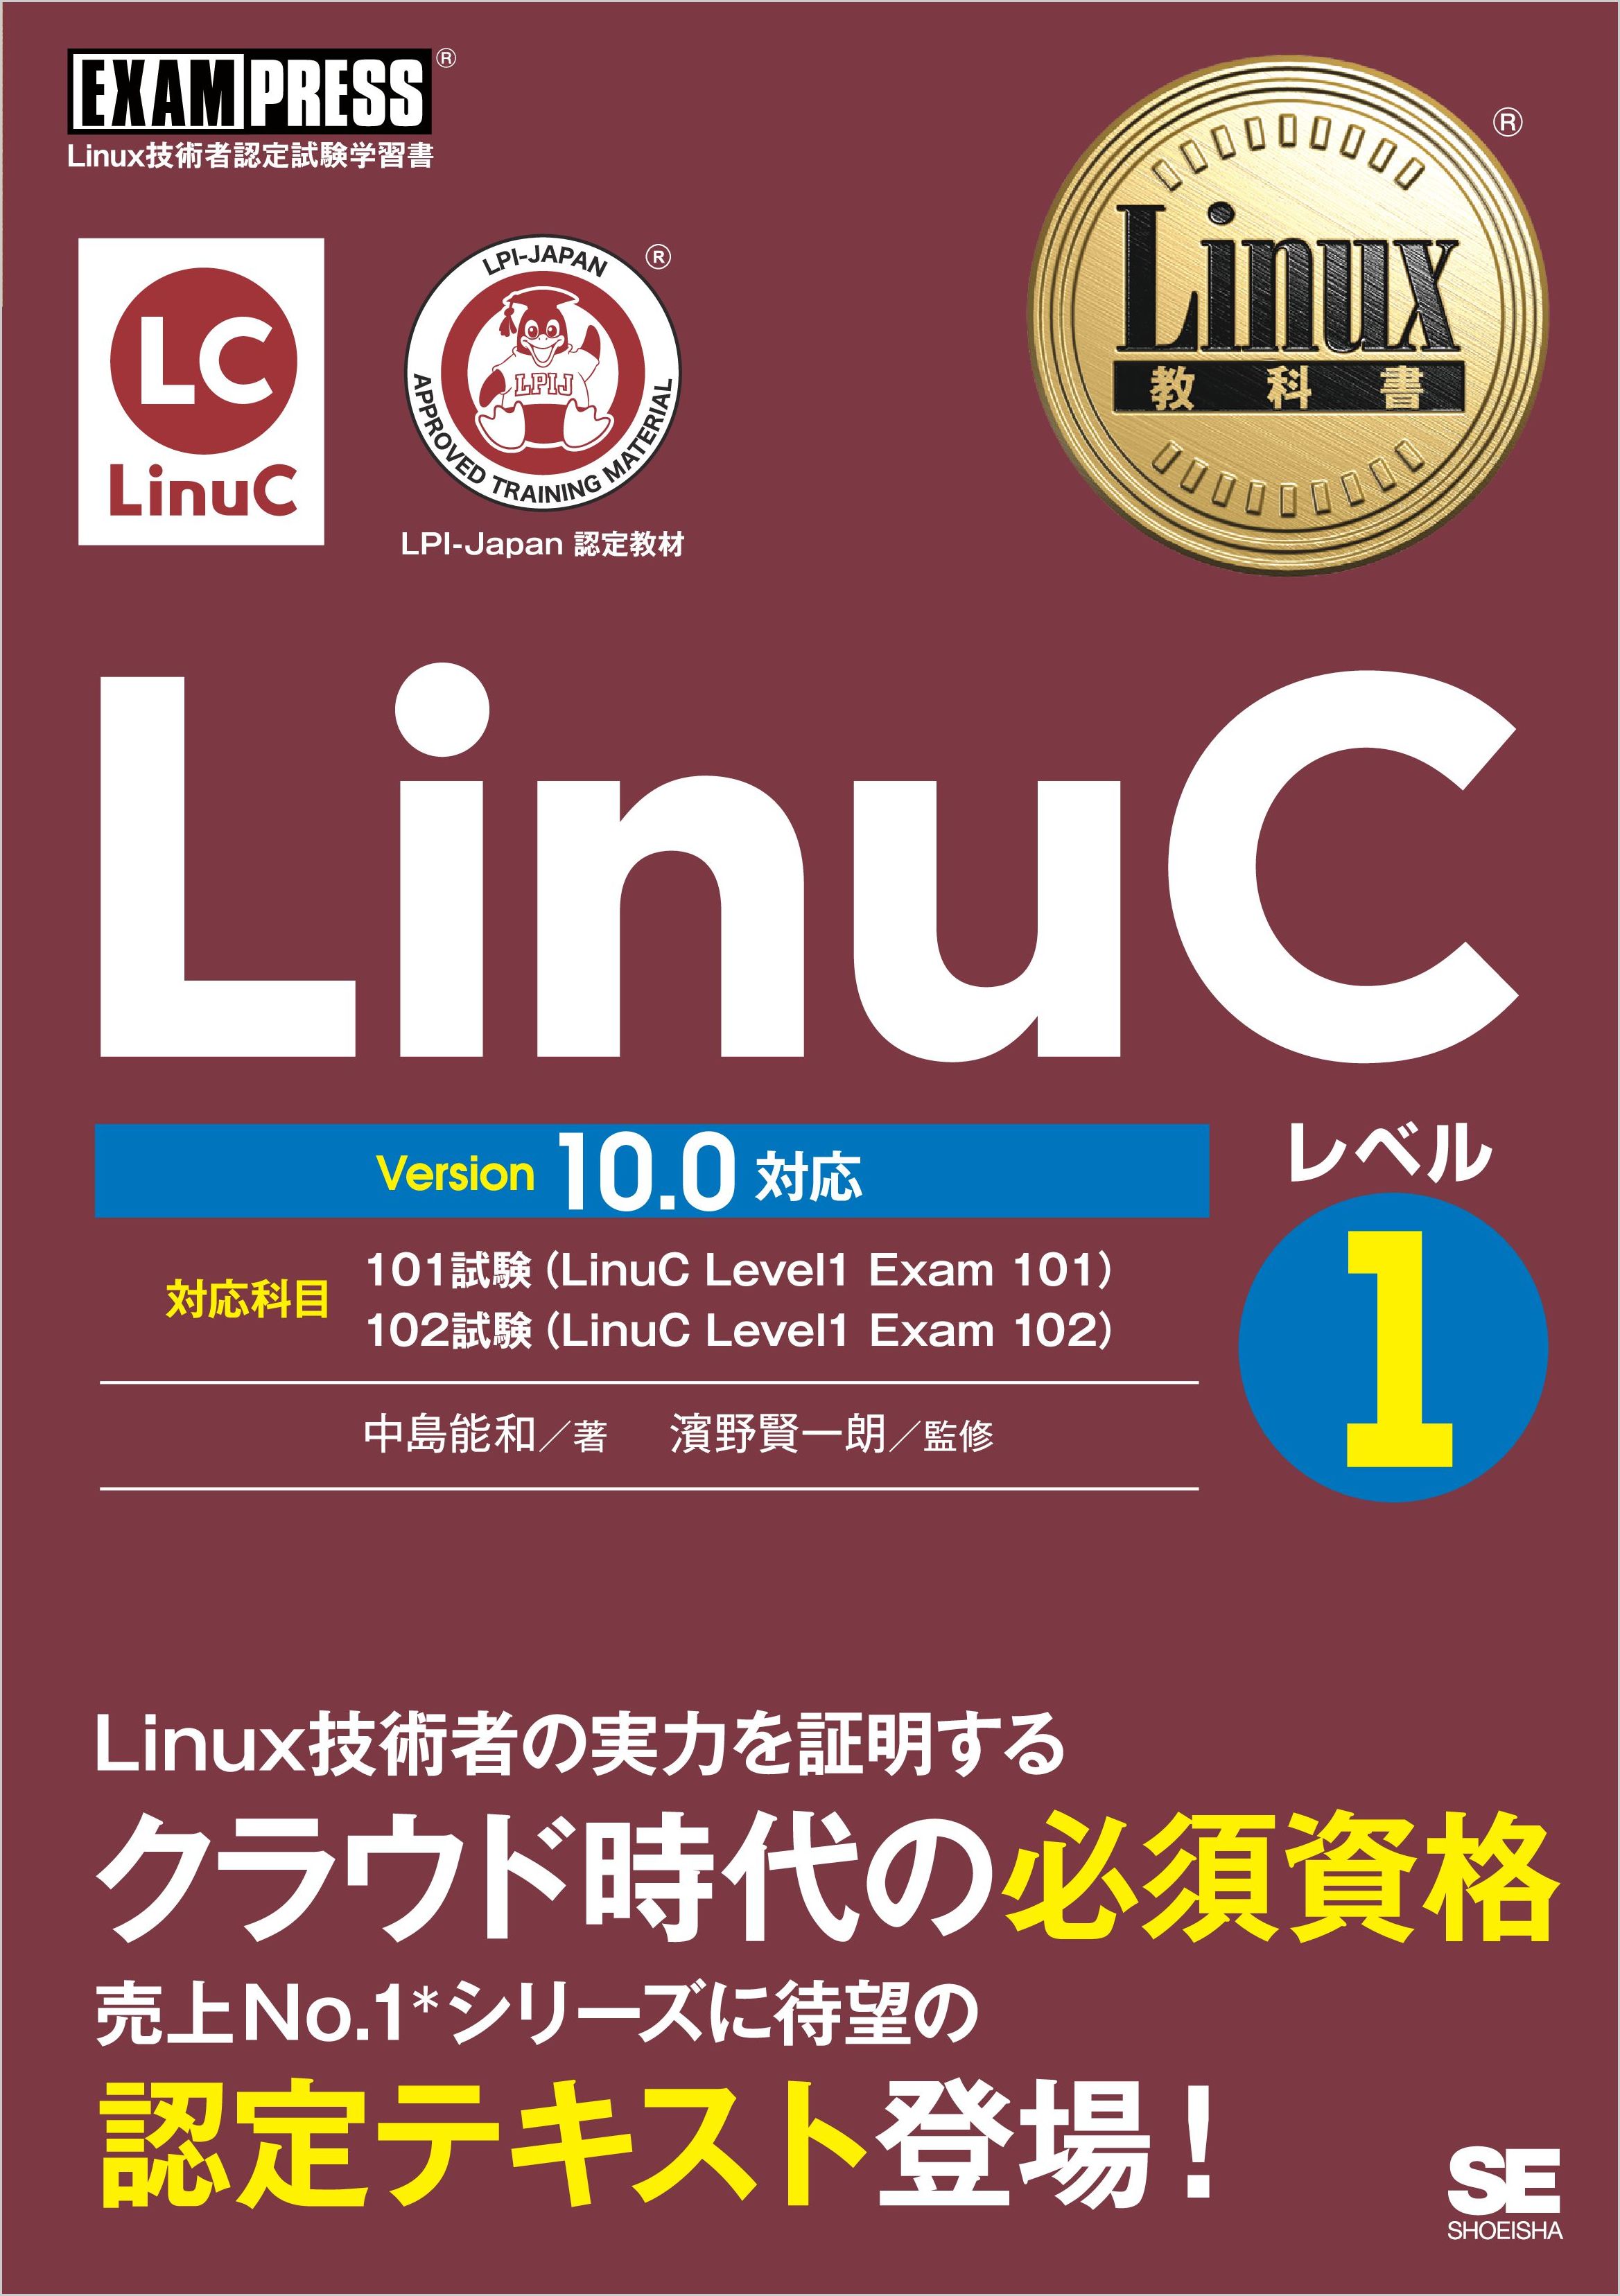 SALE／94%OFF】 Linux教科書 LPICレベル3 300試験 revecap.com